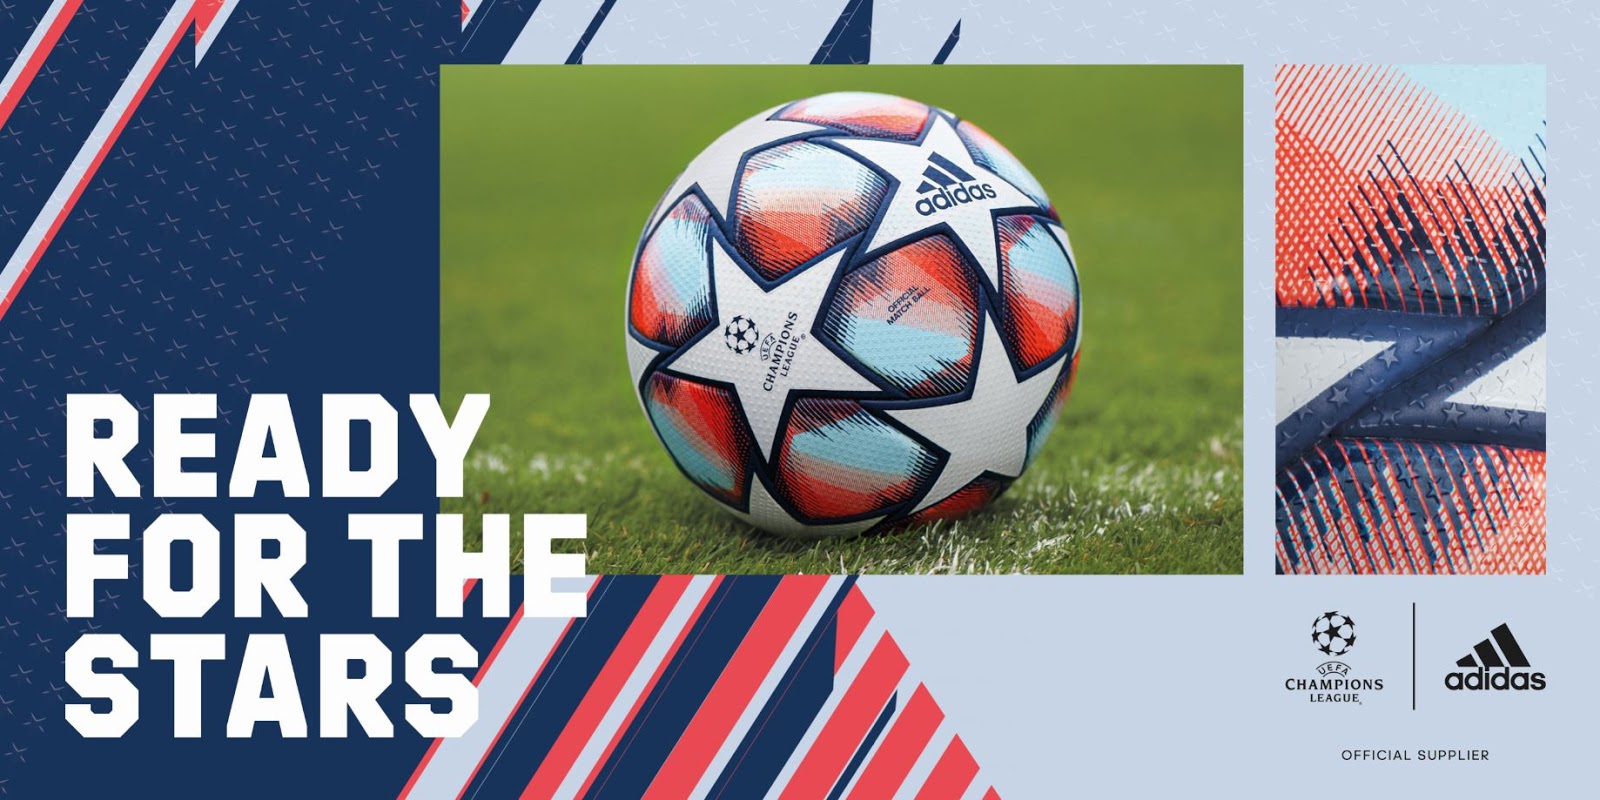 Adidas 20-21 UEFA Champions League Ball Released - Footy Headlines